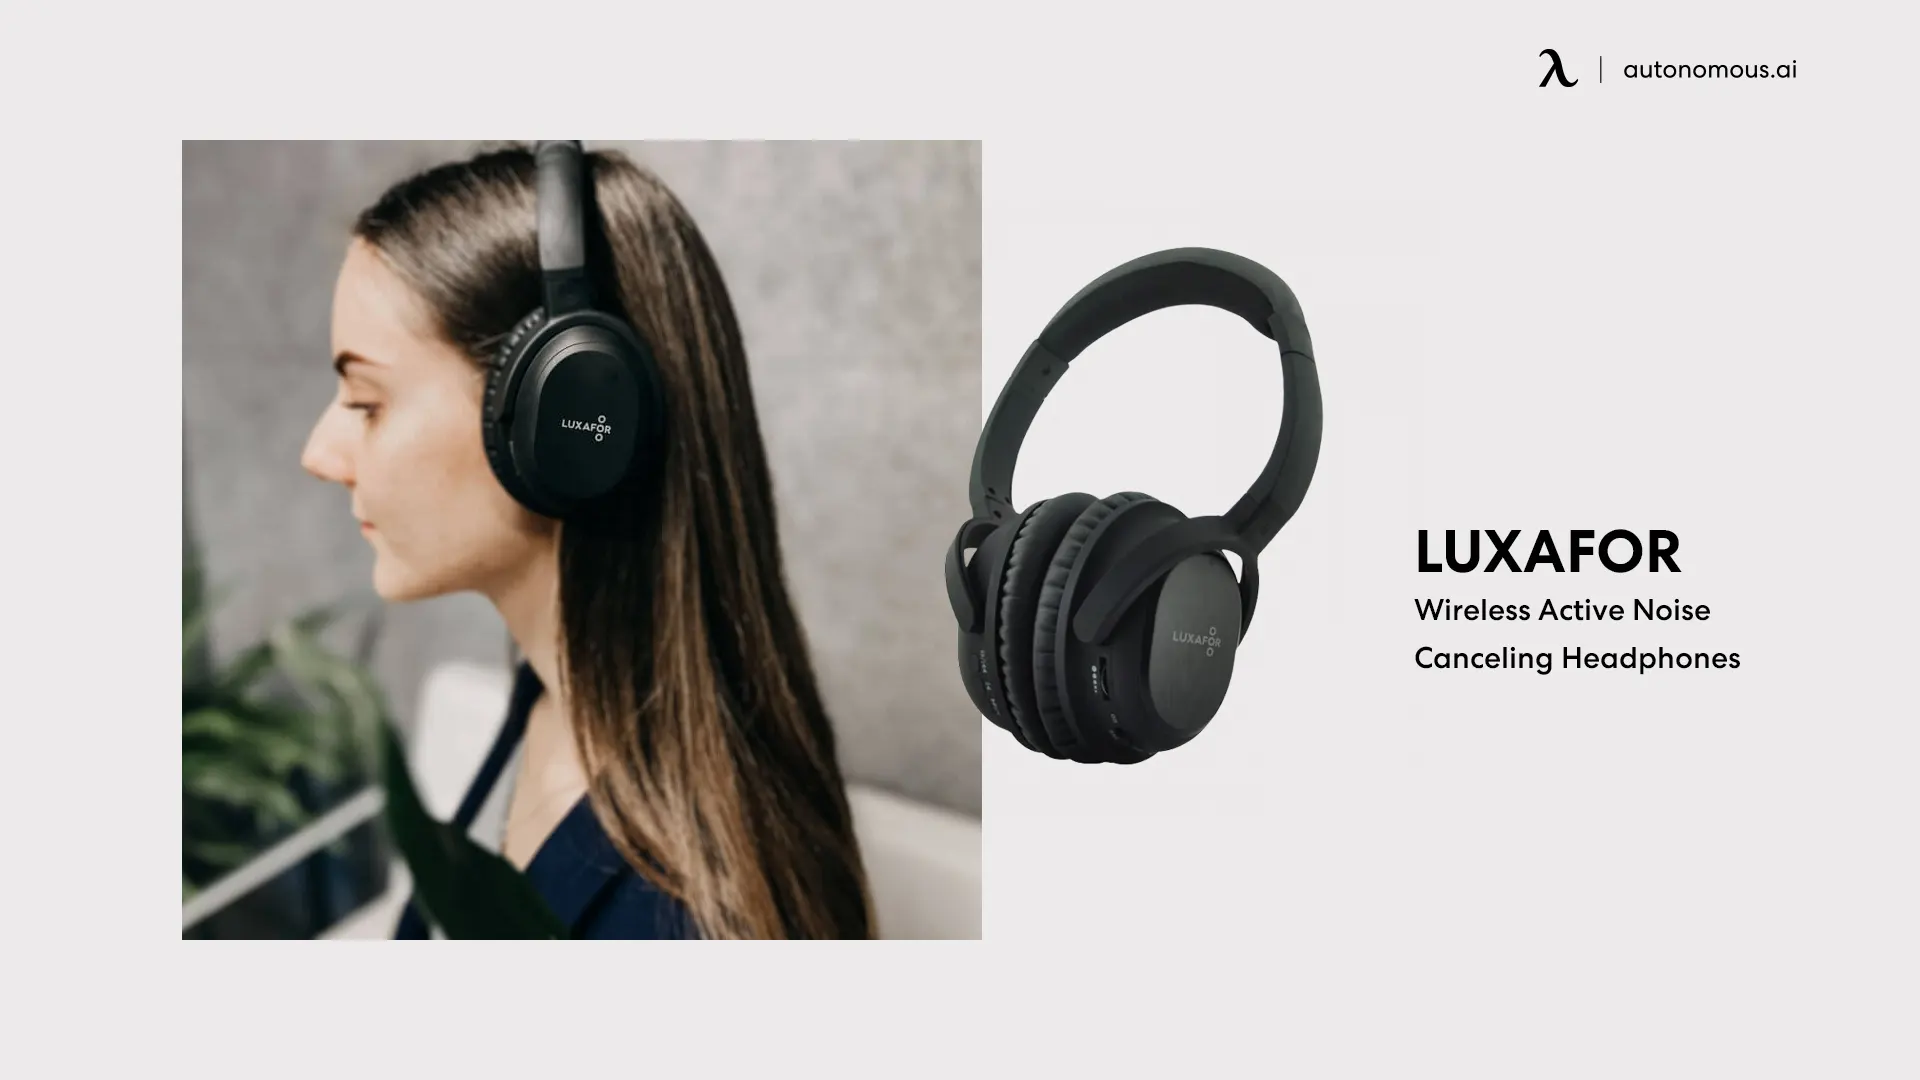 Luxafor Wireless Active Noise Canceling Headphones